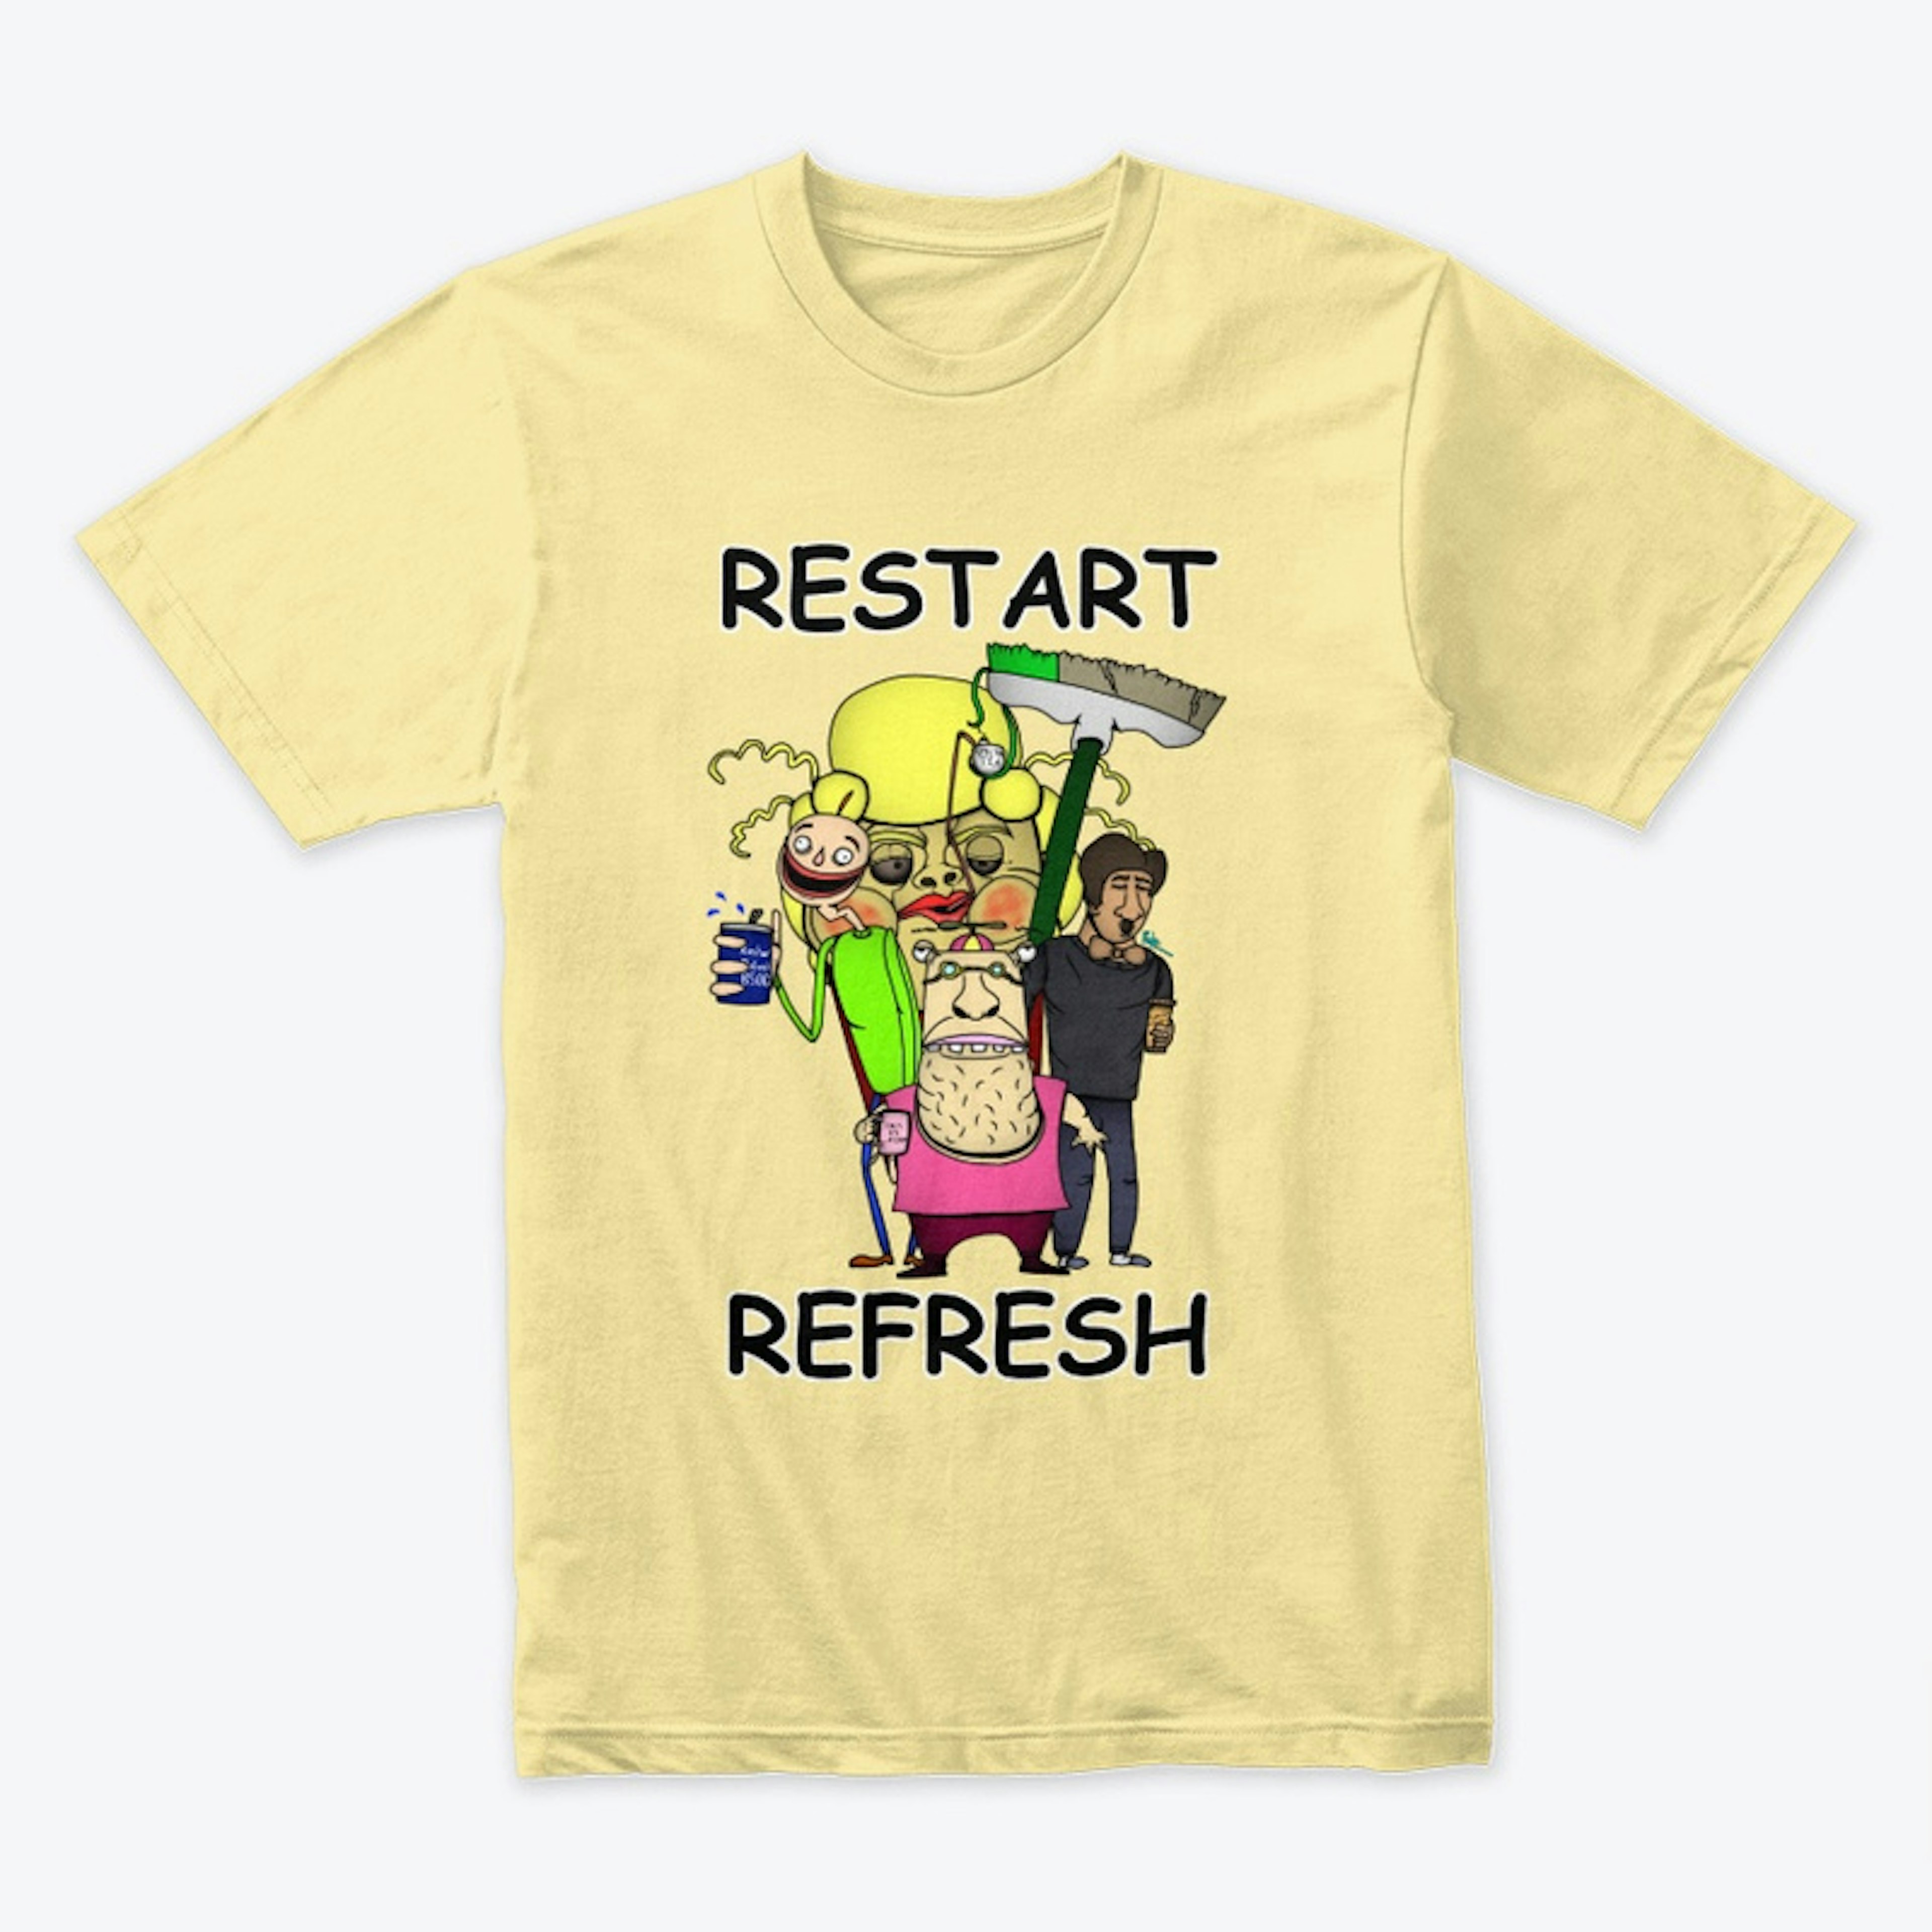 Restart, Refresh by @PadreSnowmizzle